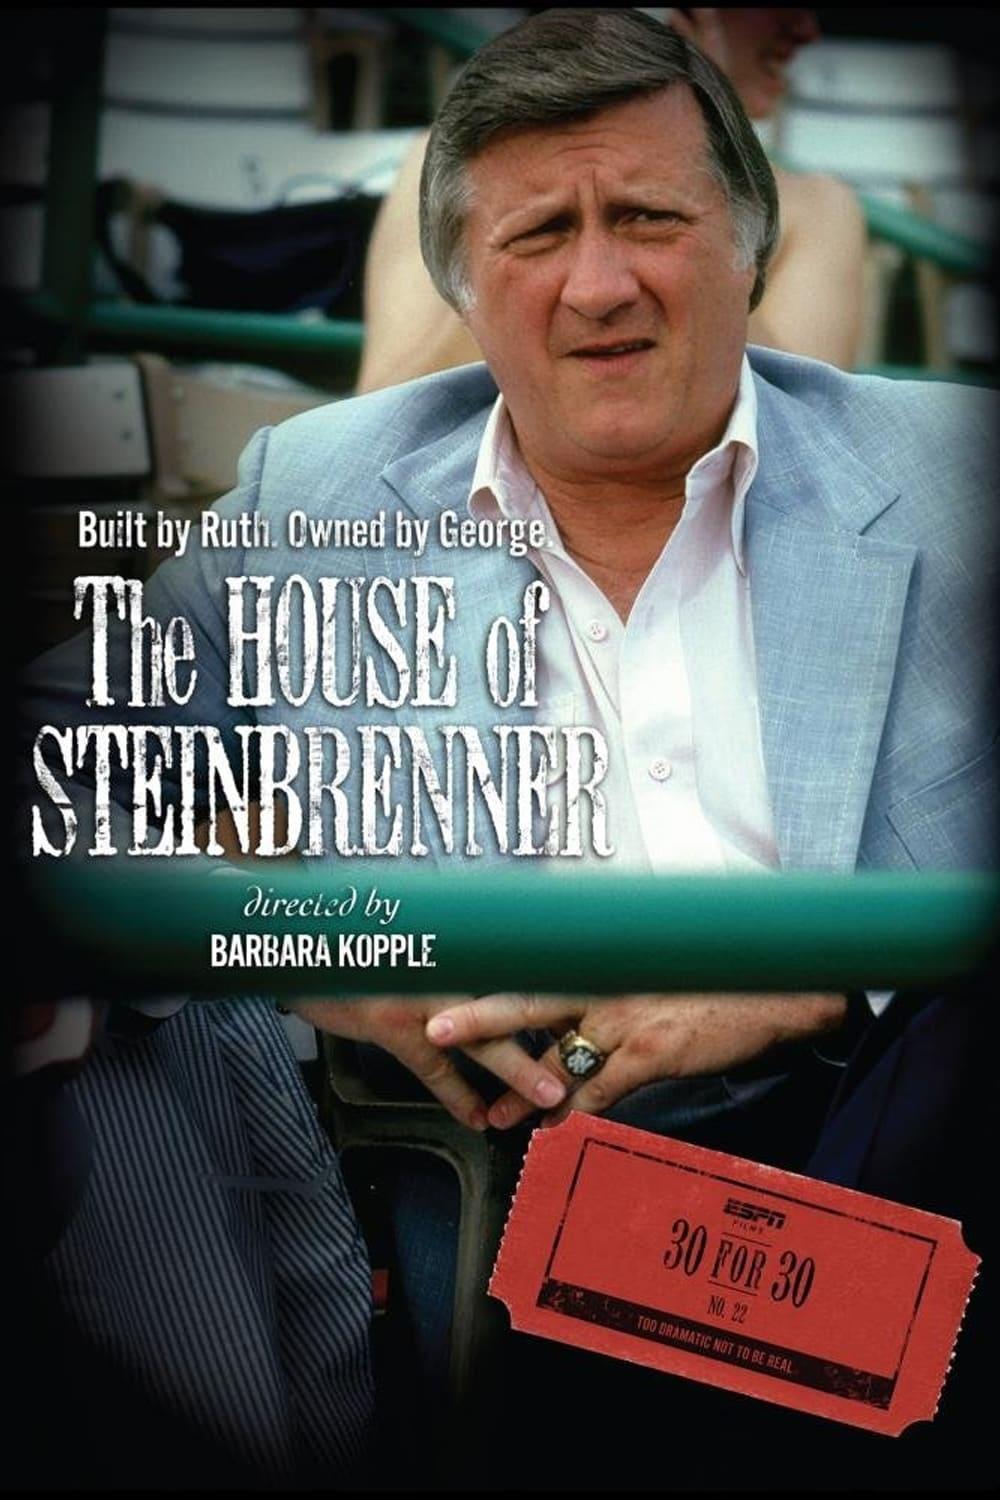 The House of Steinbrenner poster